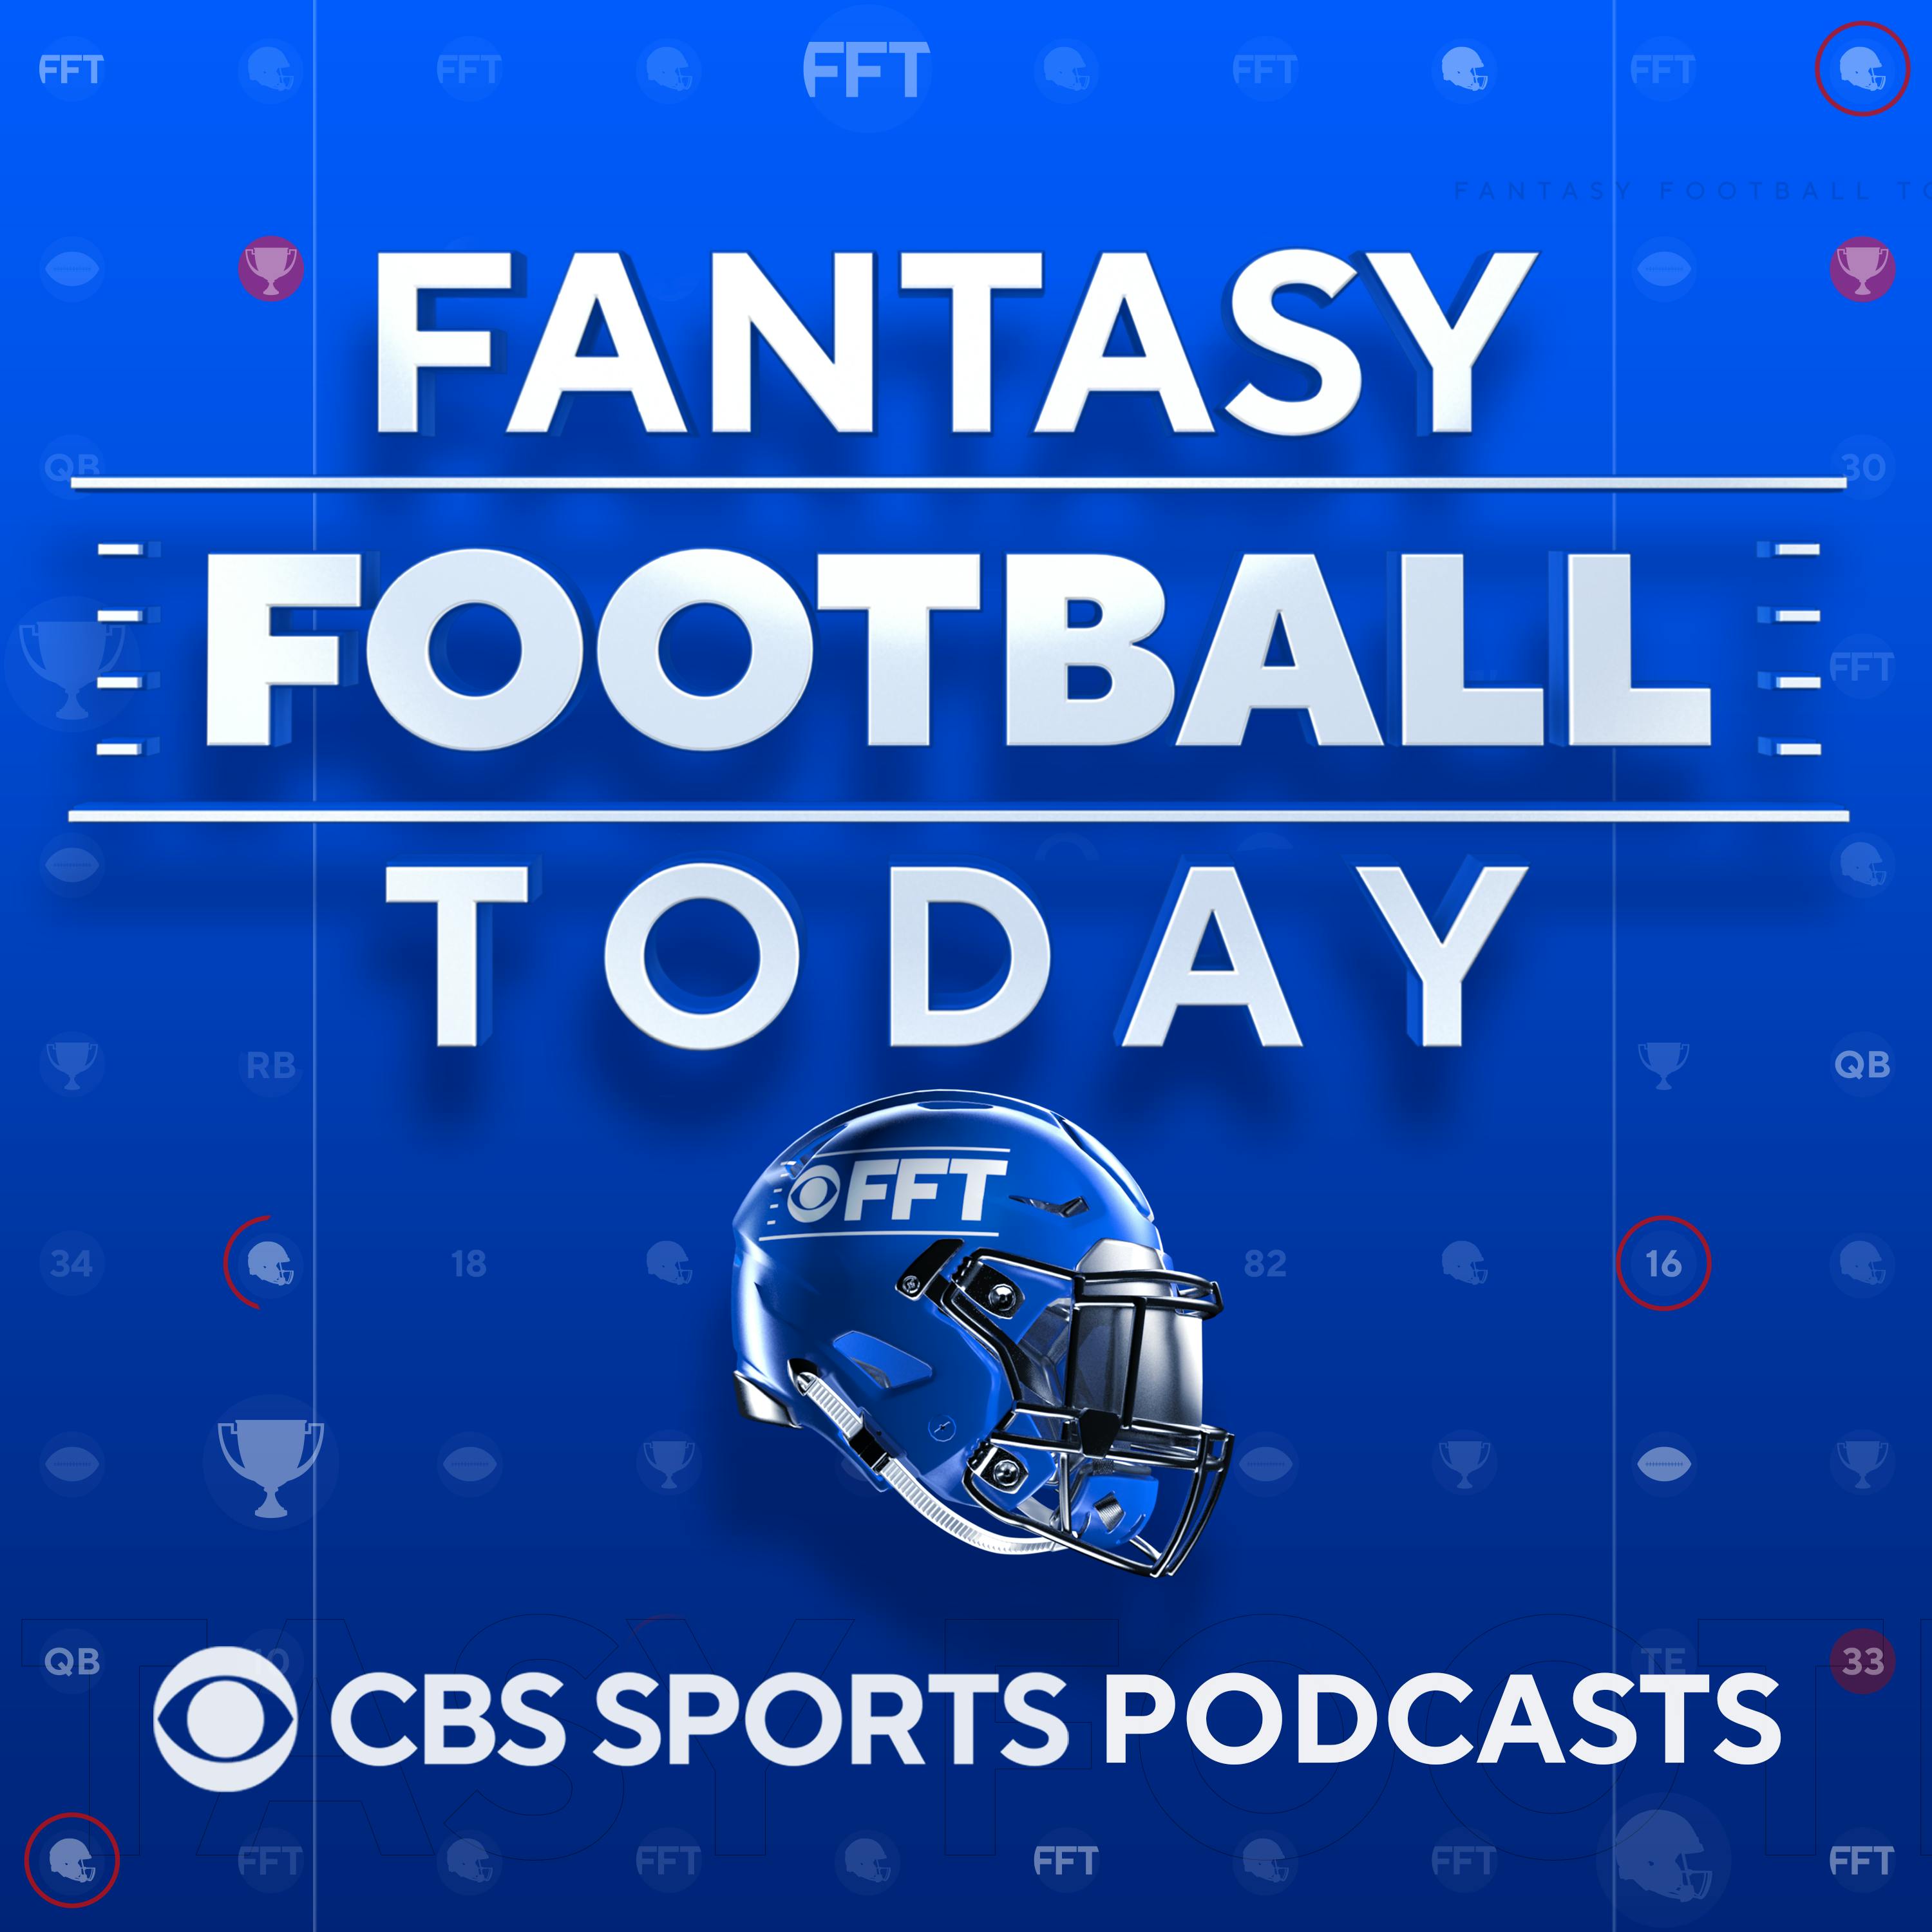 Fantasy Football Today podcast show image